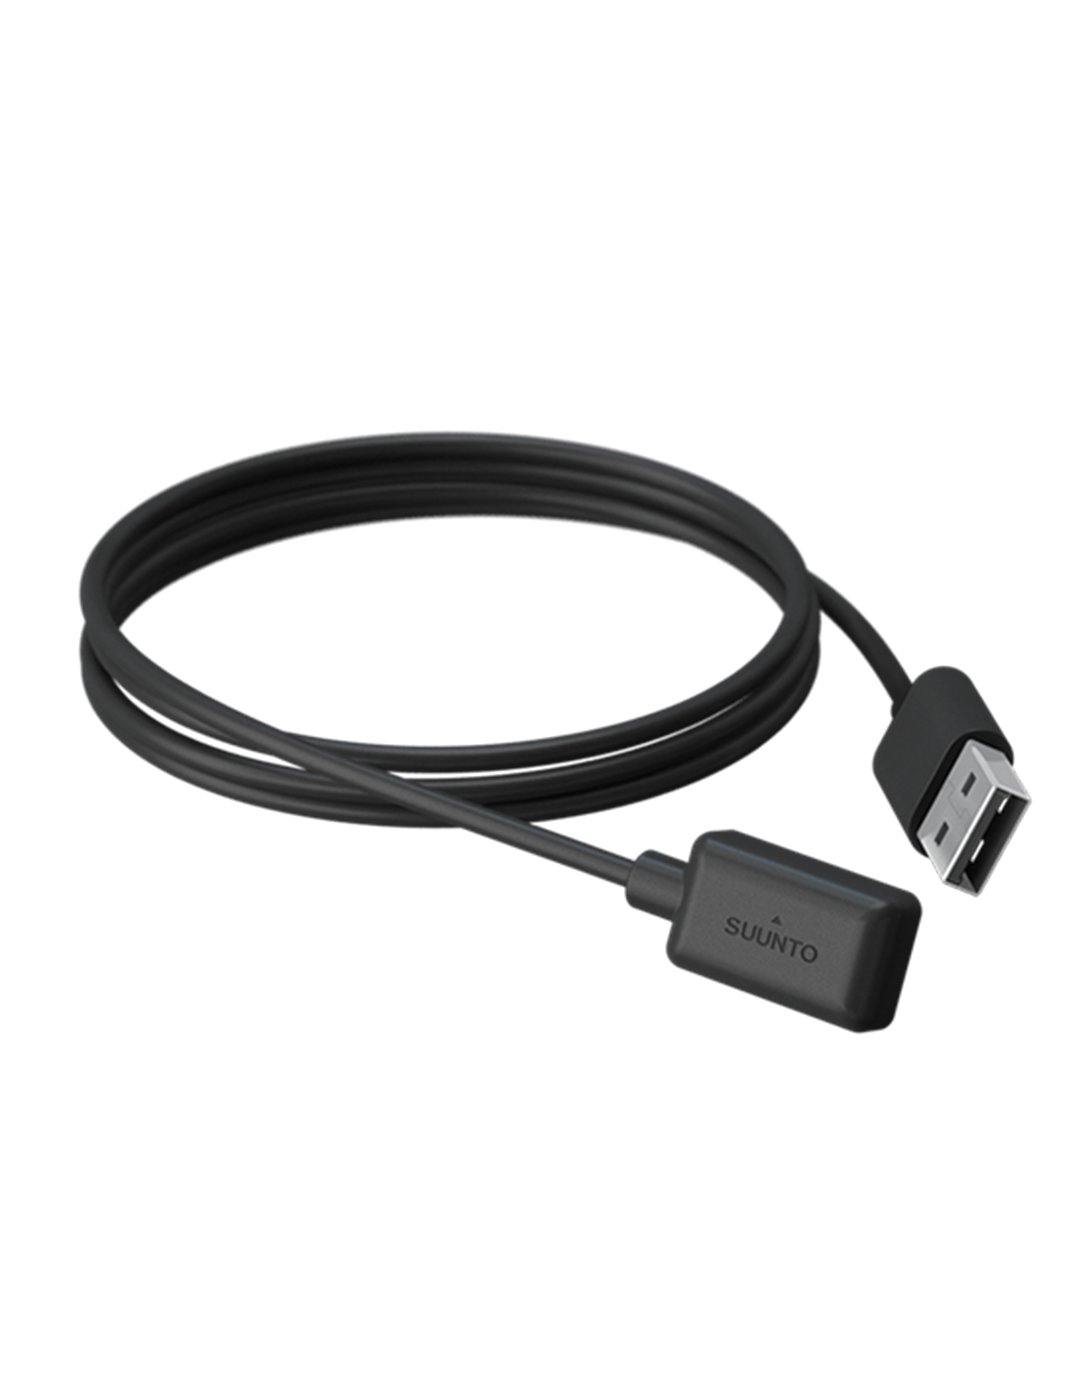 Suunto EON Core USB Interface Cable